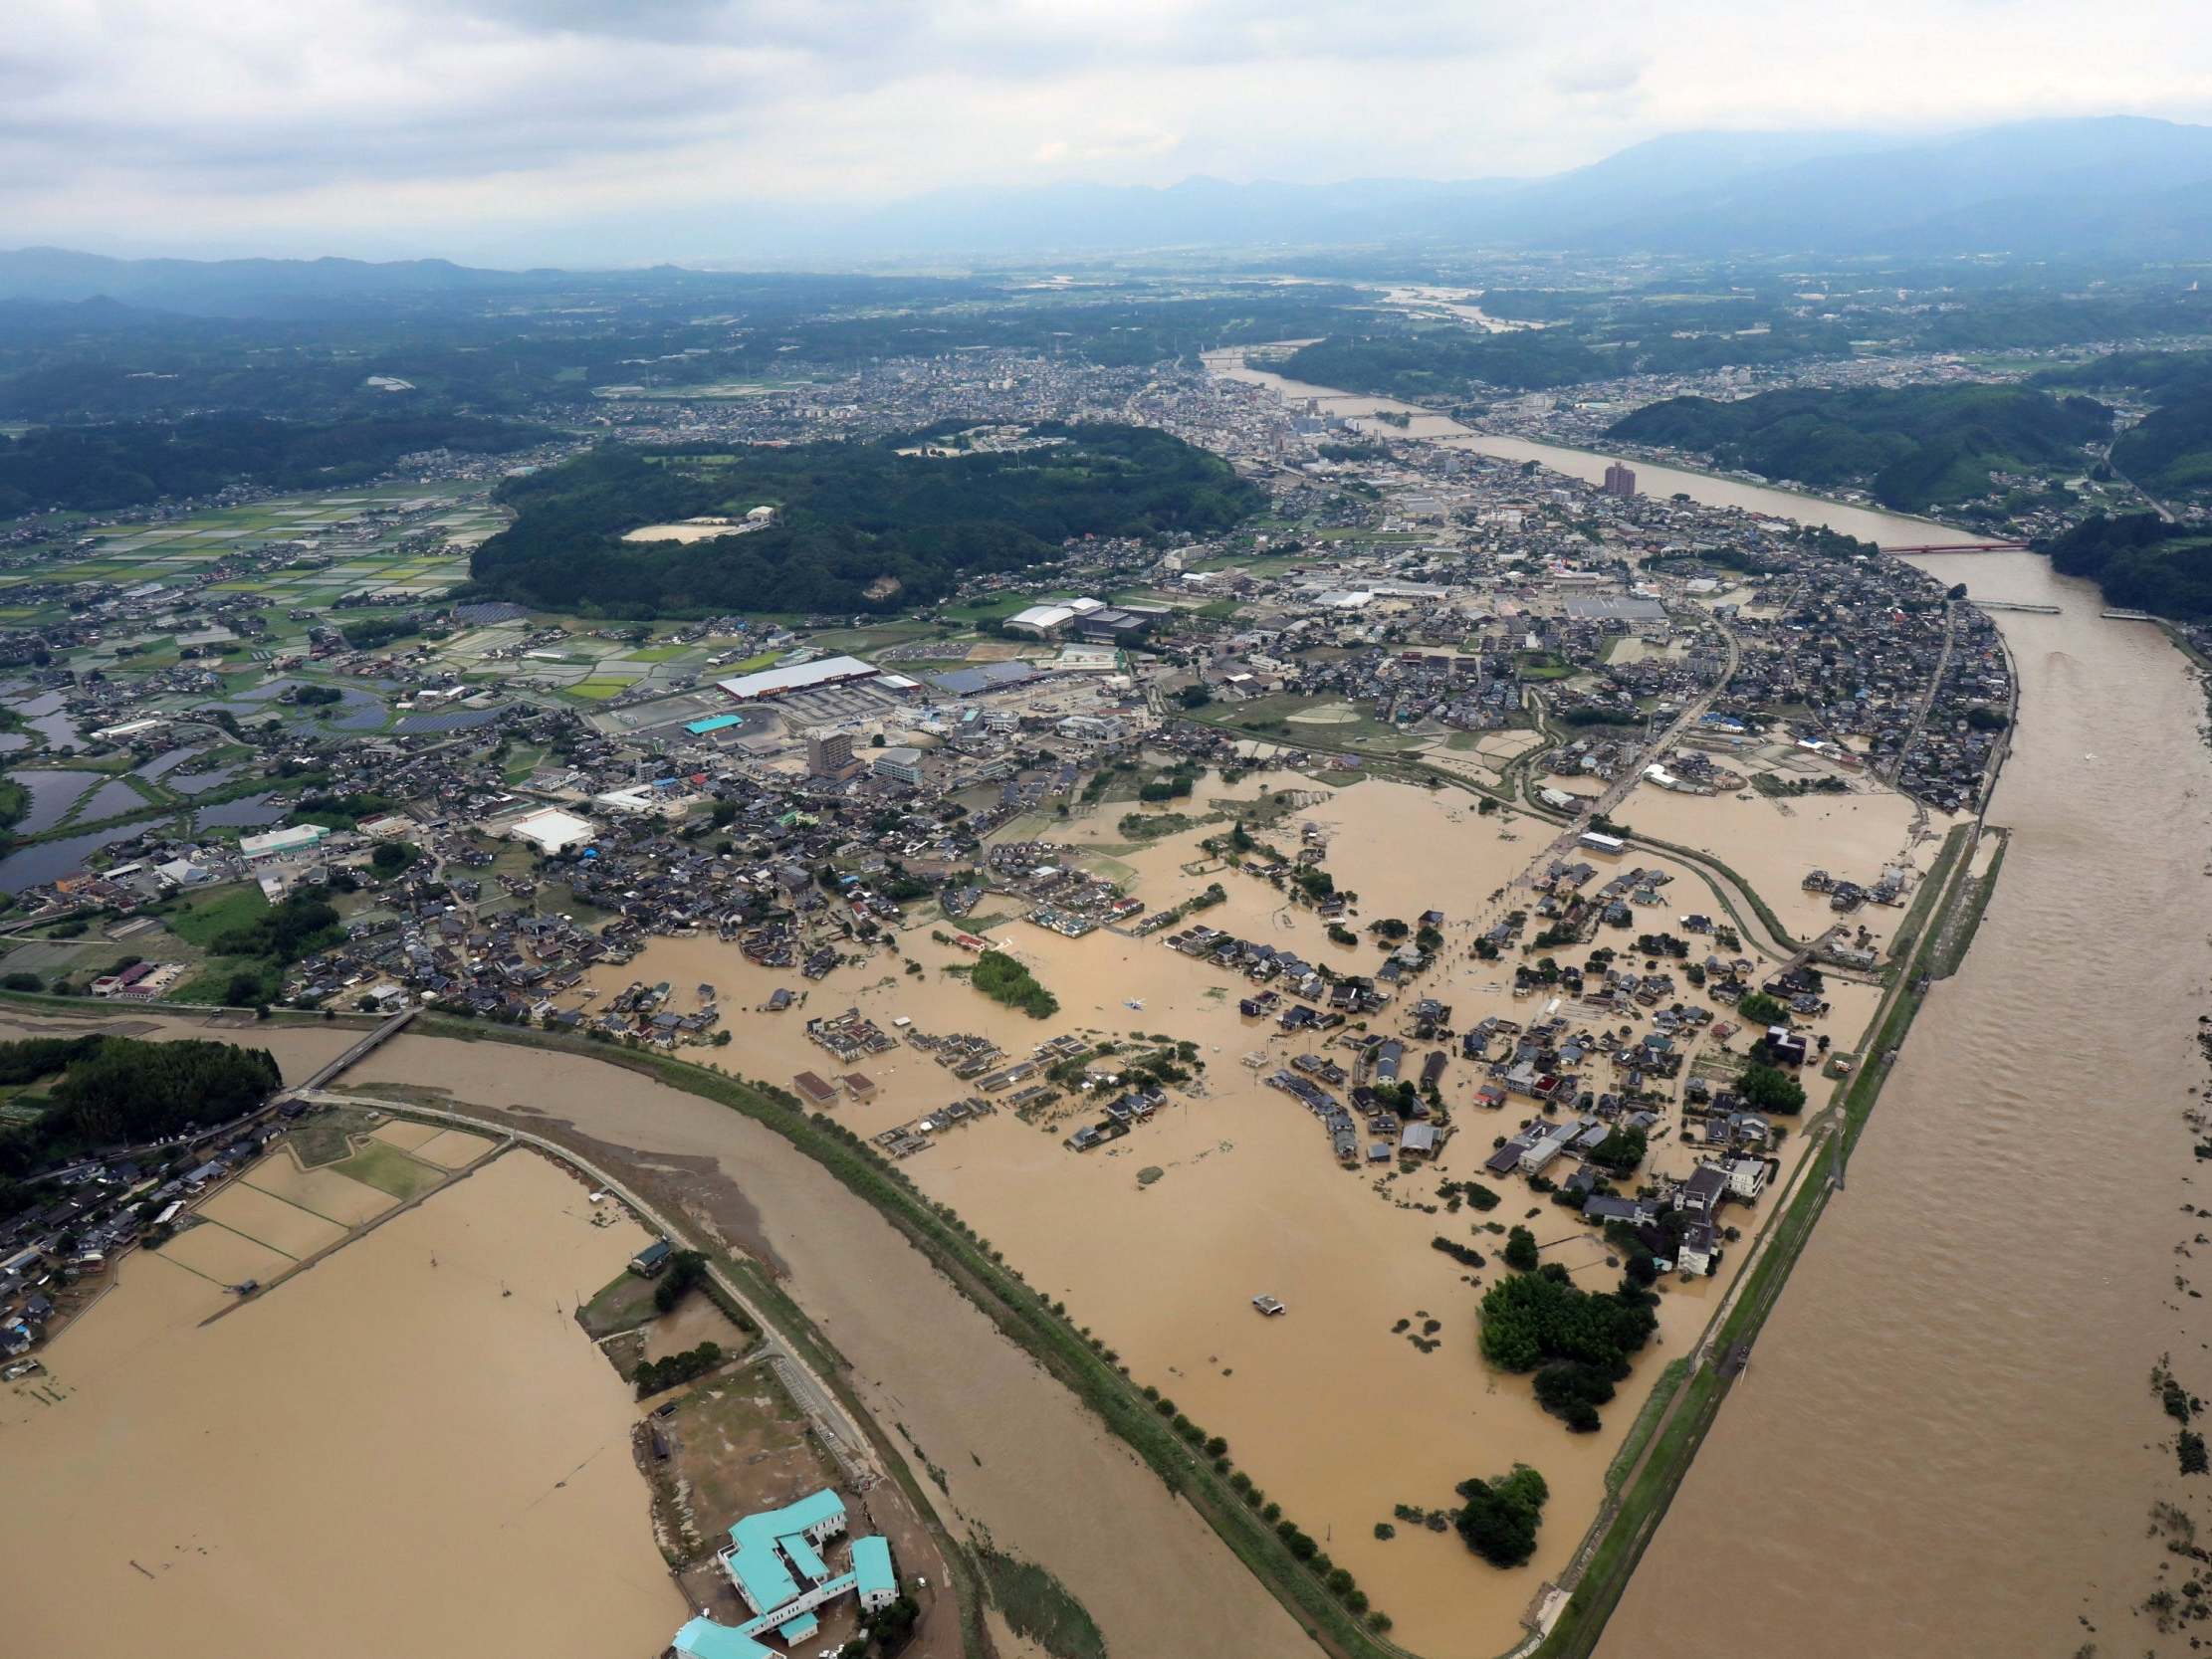 Japan floods: 'Unprecedented rainfall' leaves at least 15 dead and houses swept away amid devastating landslides